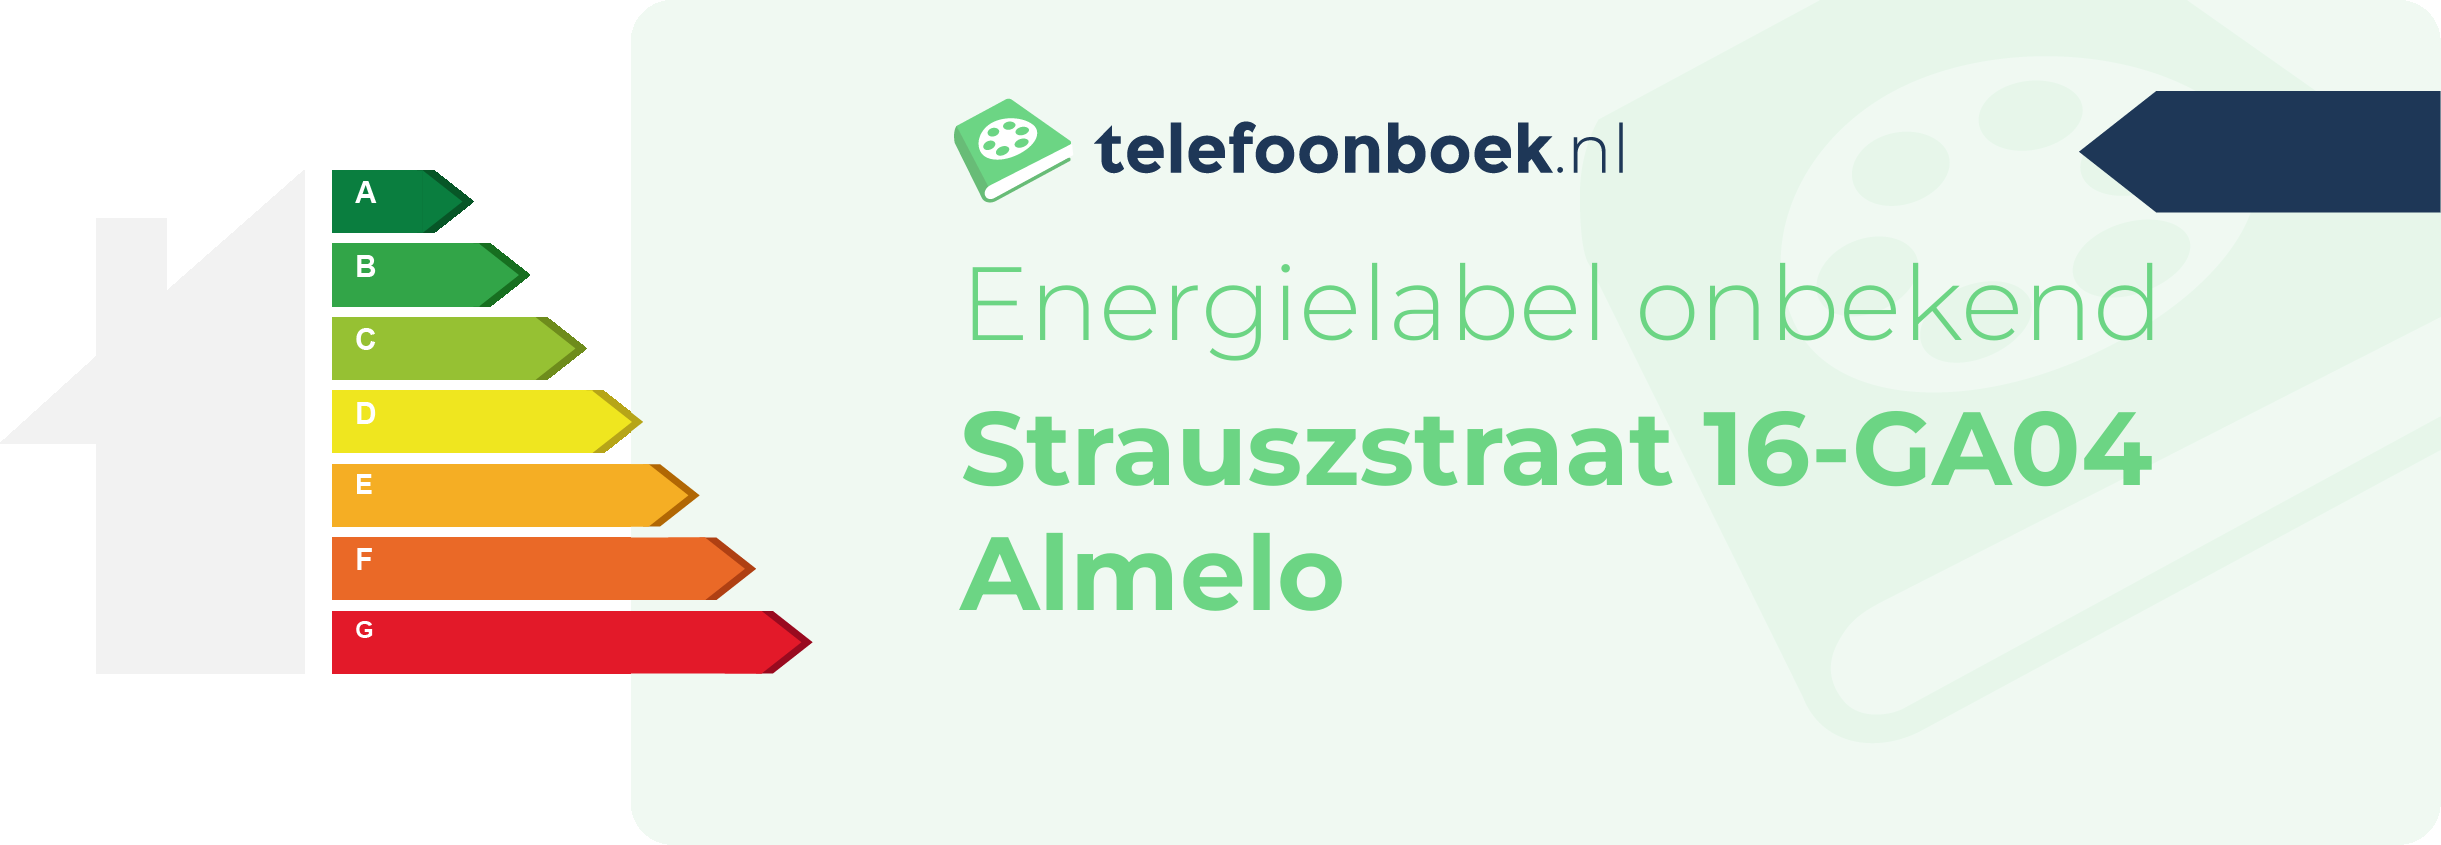 Energielabel Strauszstraat 16-GA04 Almelo